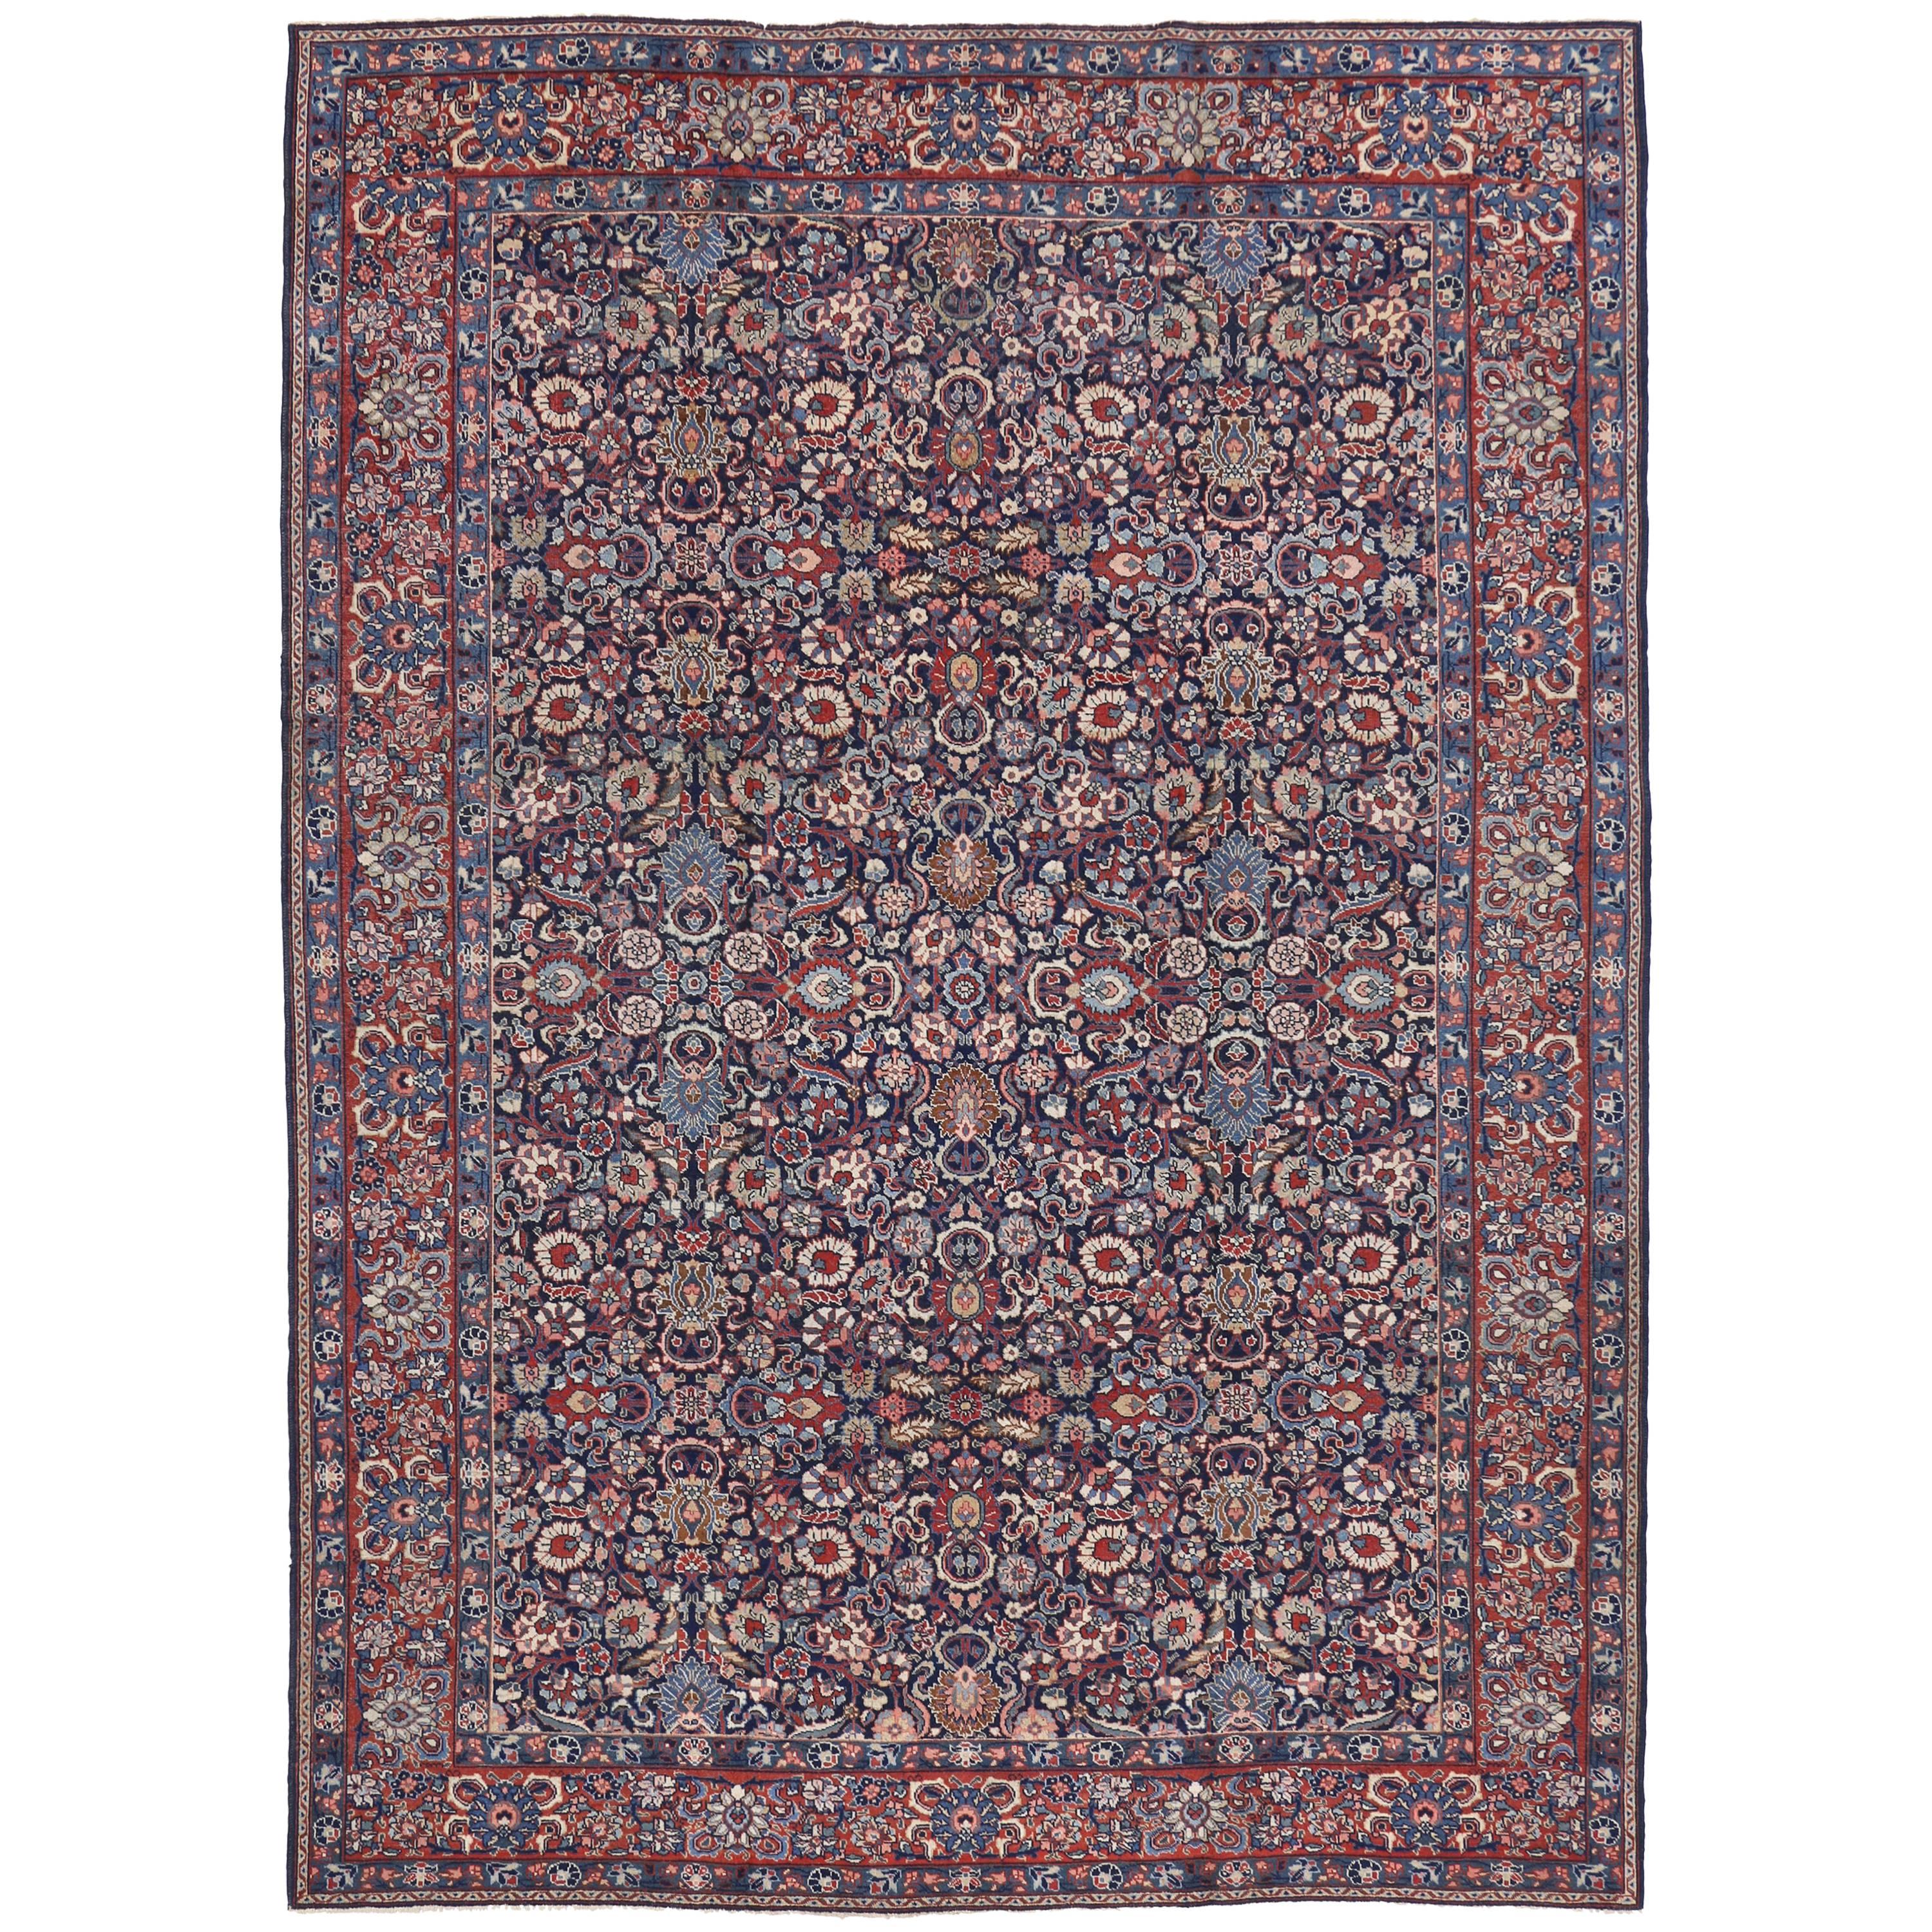 Tapis persan ancien de Tabriz avec tapis de luxe de style baroque